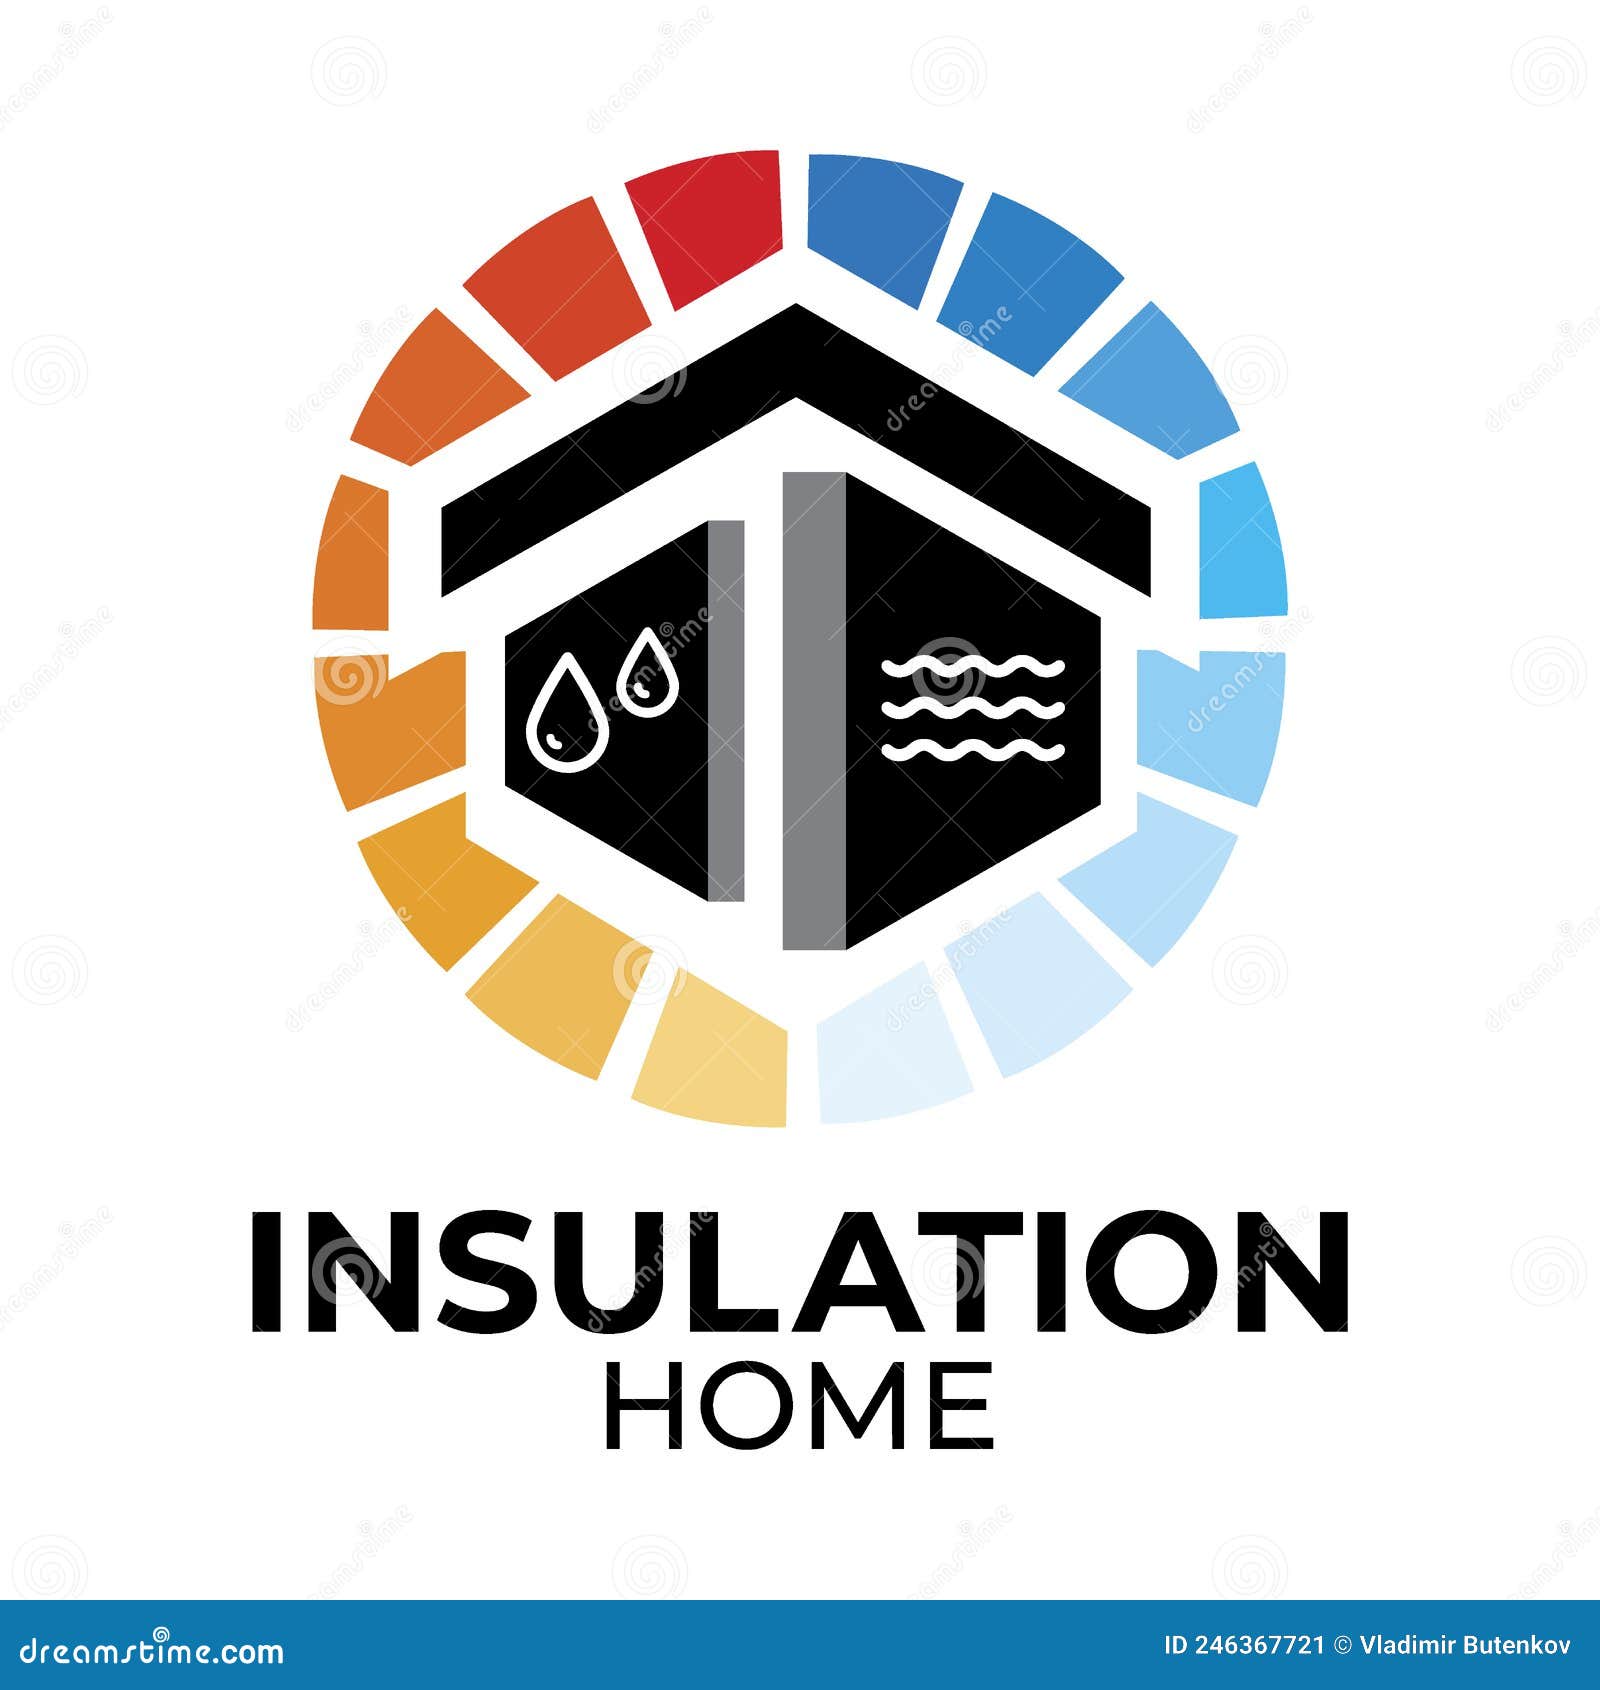 insulation logo ideas 1